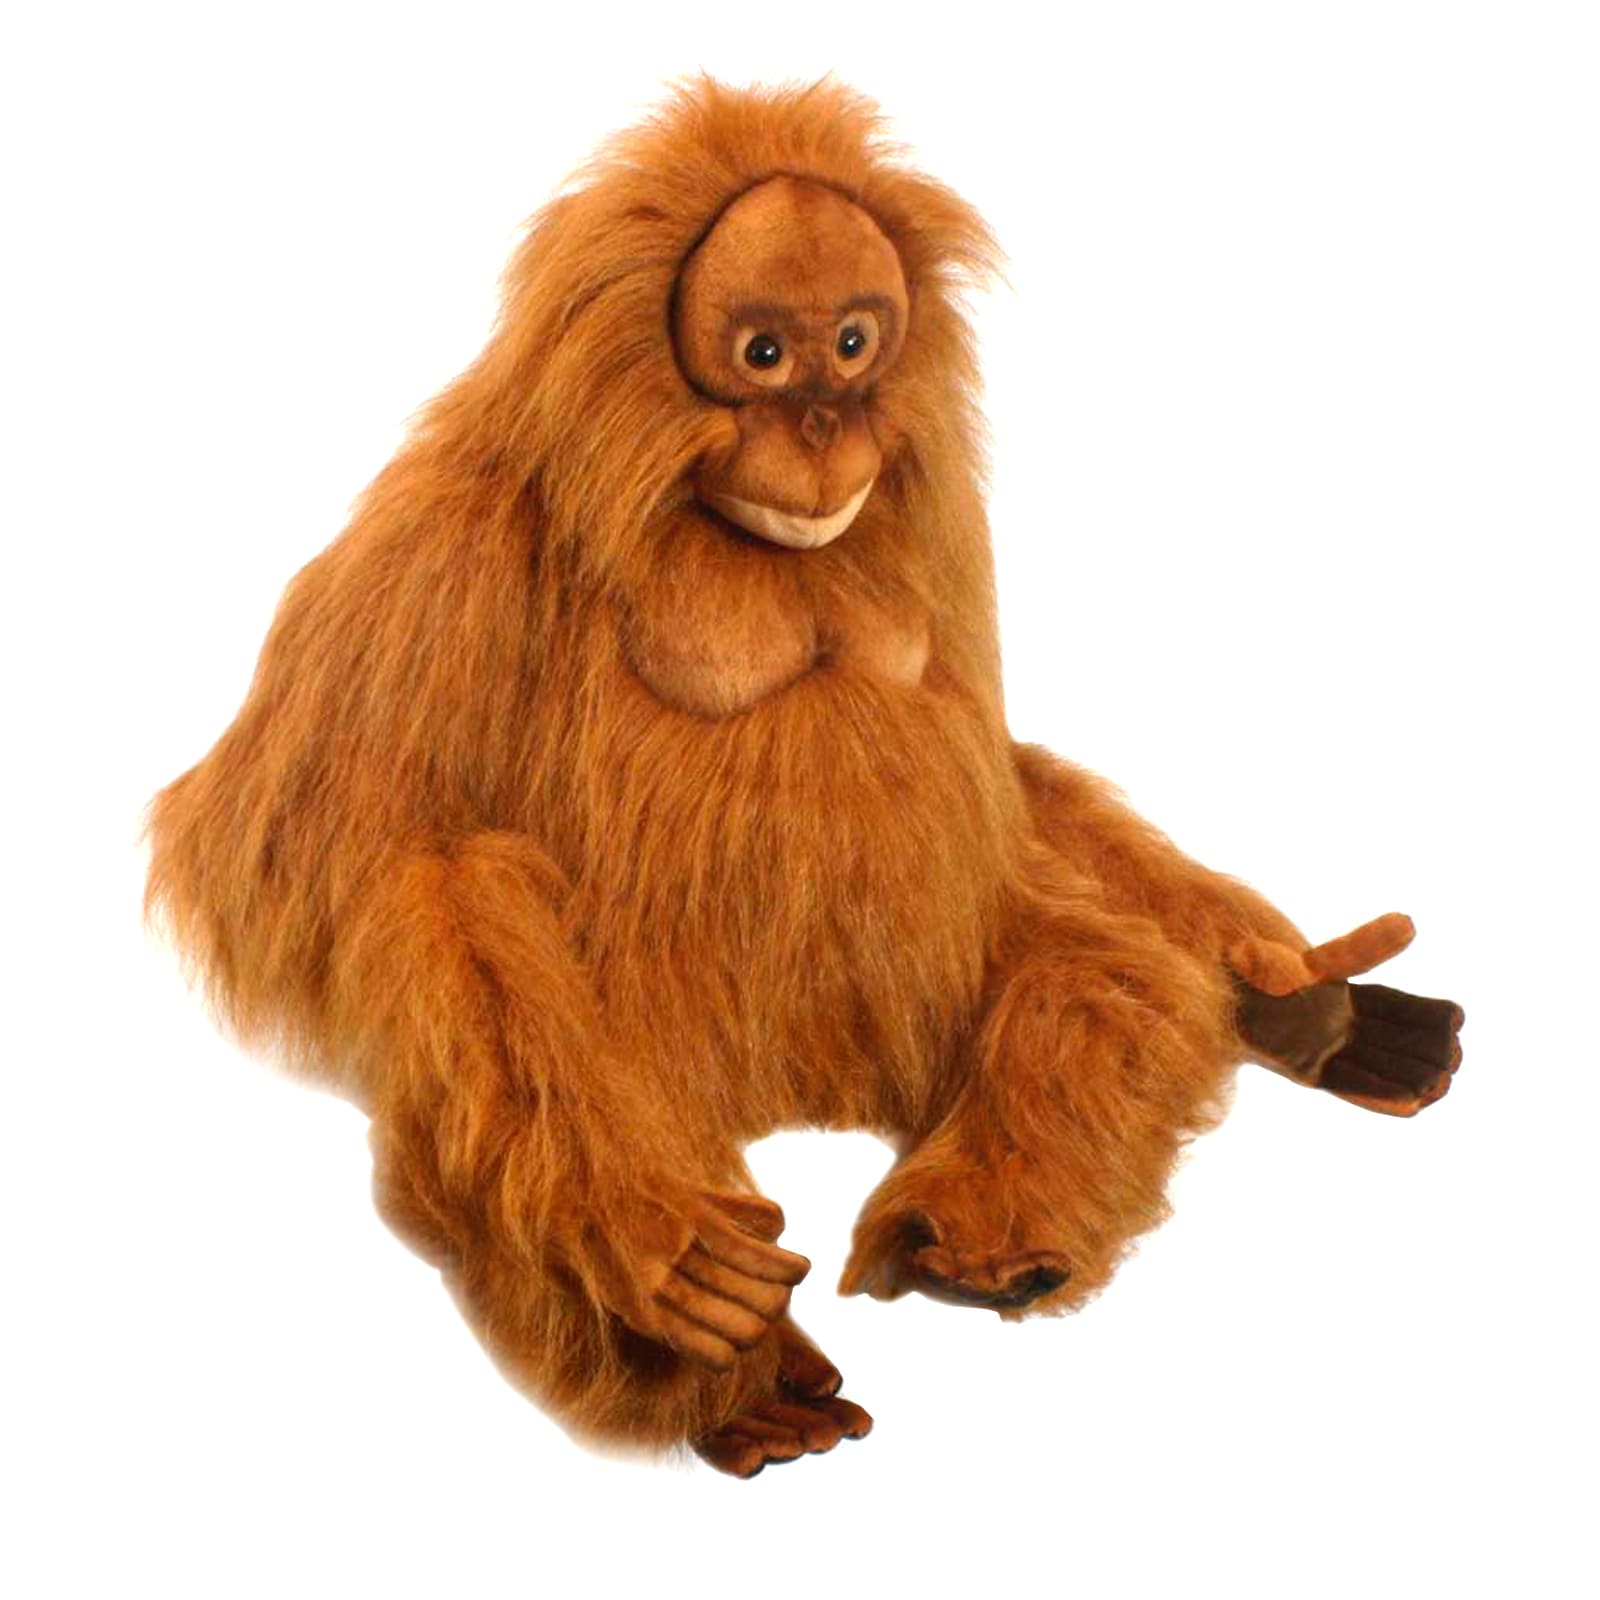 stuffed animal orangutan